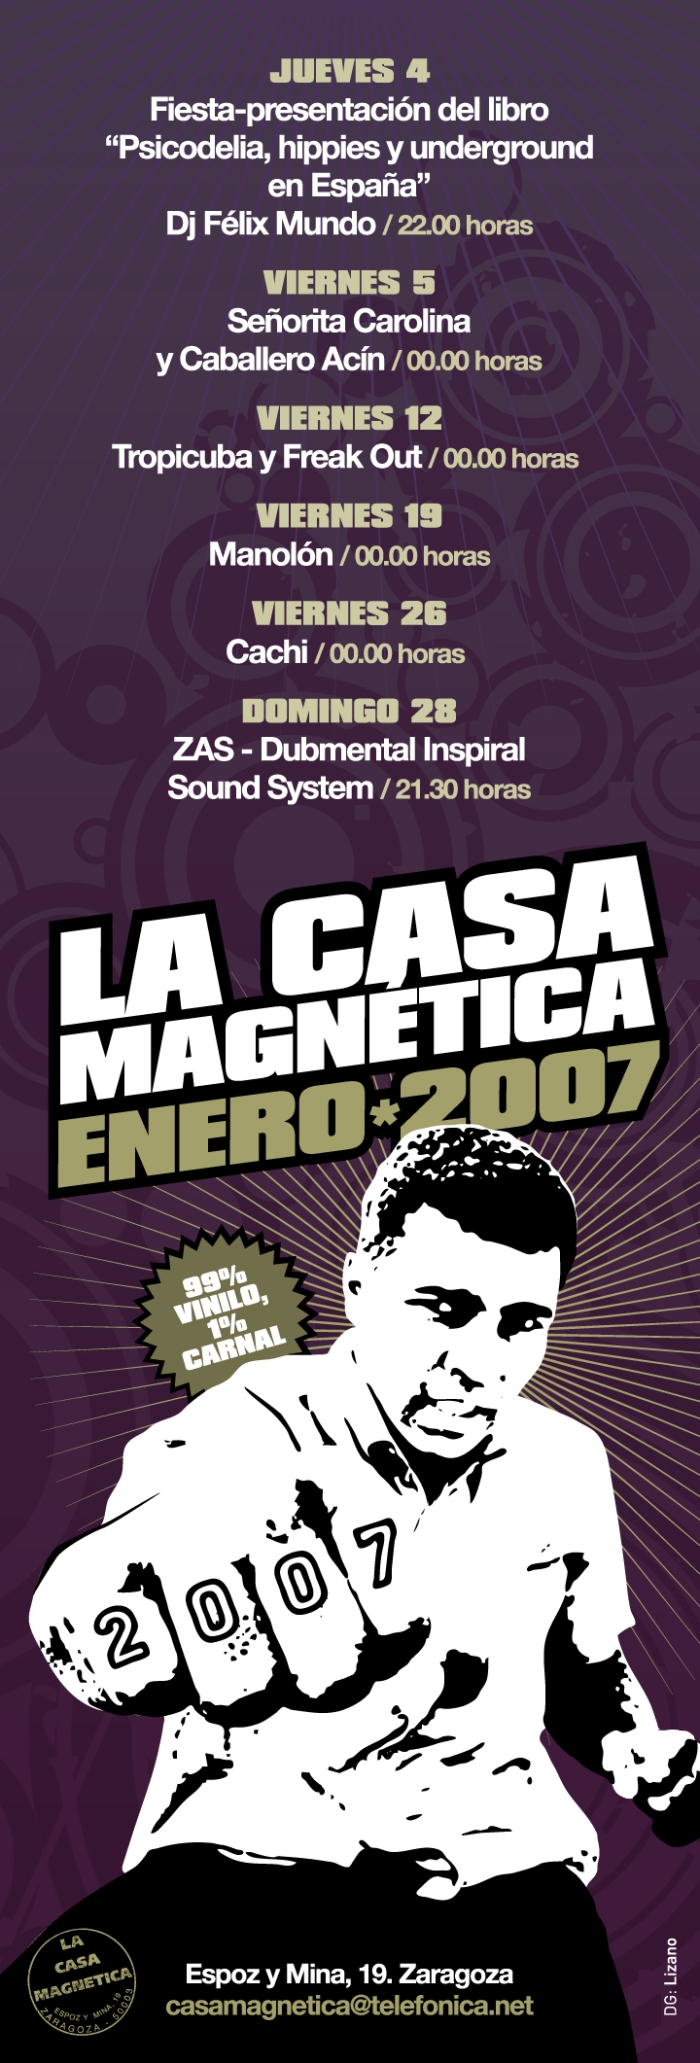 LaCasaMagneticaEnero2007